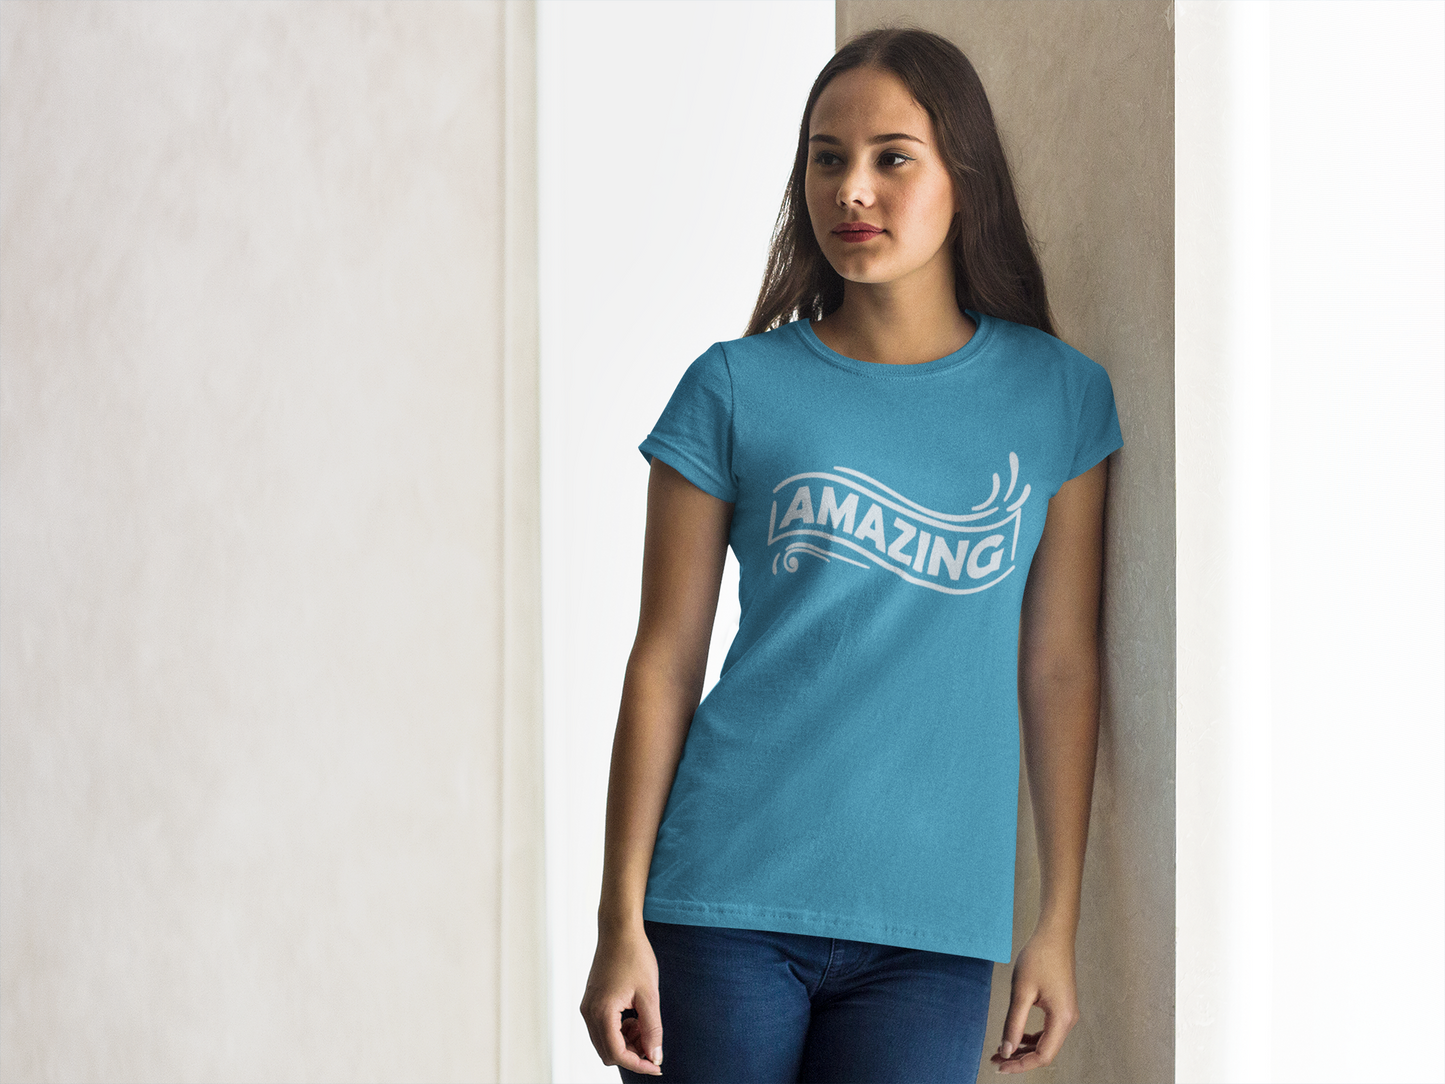 Amazing, Unisexshirt, Motivational Shirt, Inspirational Shirt, Positive Shirts, Gift Ideas for Women, Gift Ideas for Men